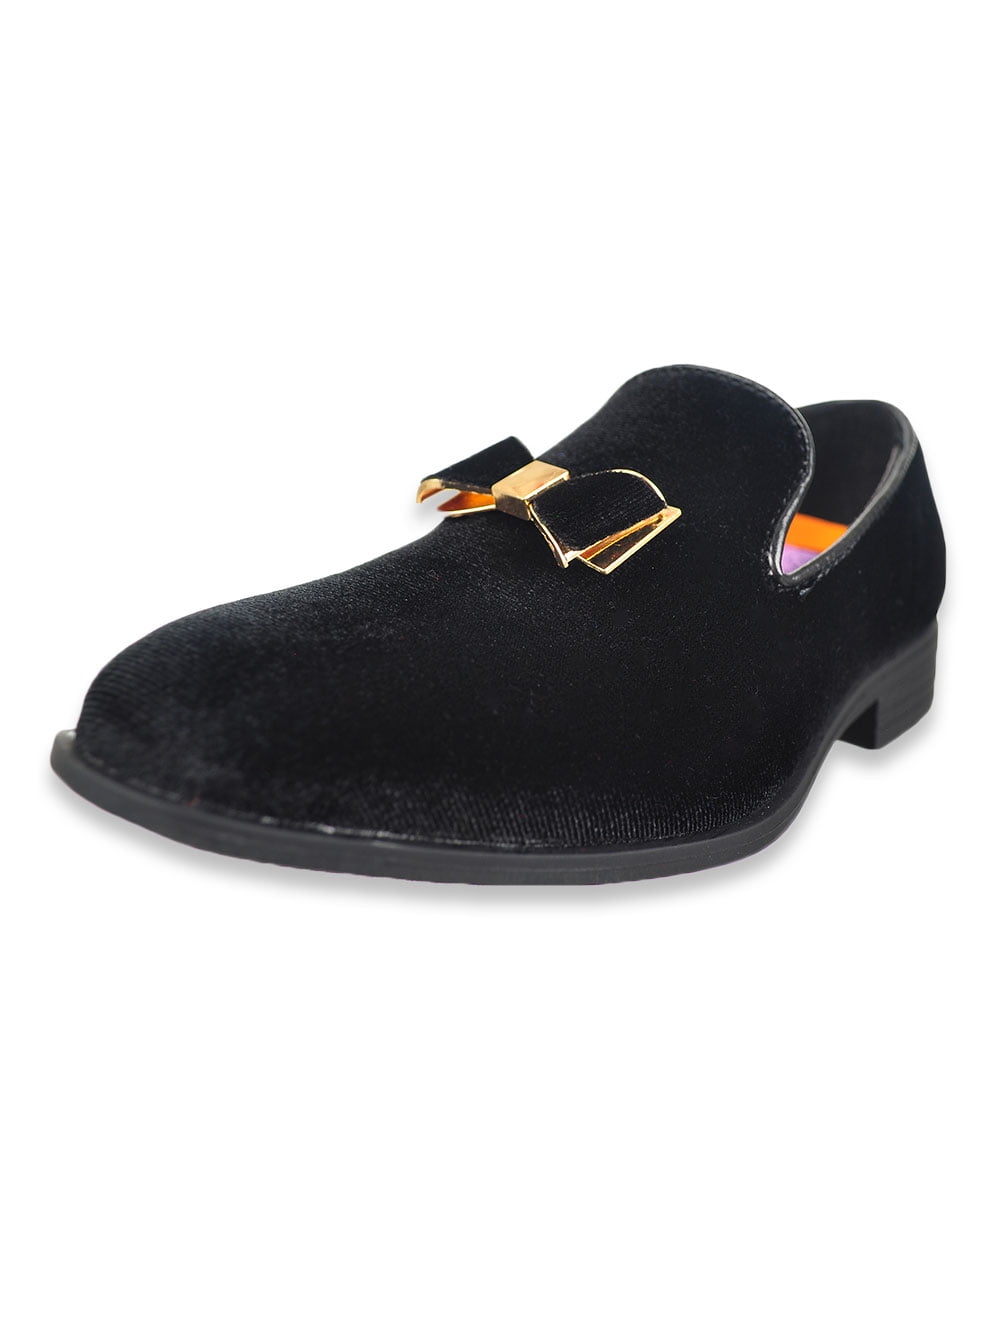 Shoes Boys Shoes Loafers & Slip Ons FERUCCI Kids Children Plain Black Velvet Slippers Loafers Shoes  Wedding 